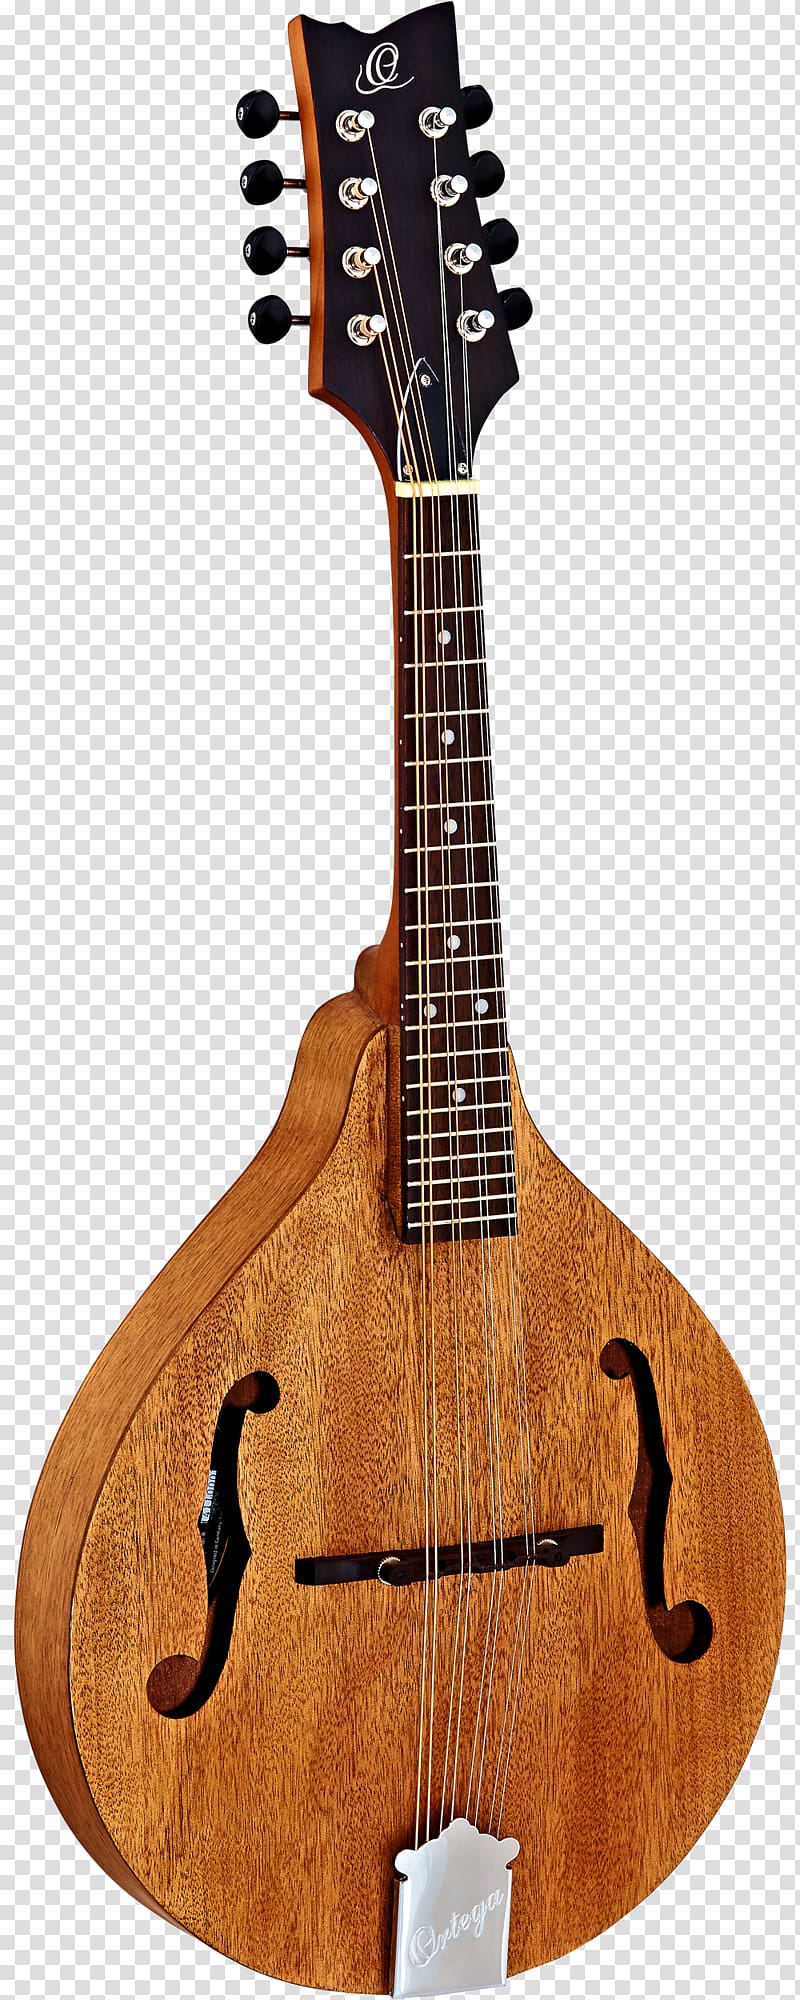 Taylor Guitars Steel-string acoustic guitar Acoustic-electric guitar, amancio ortega transparent background PNG clipart